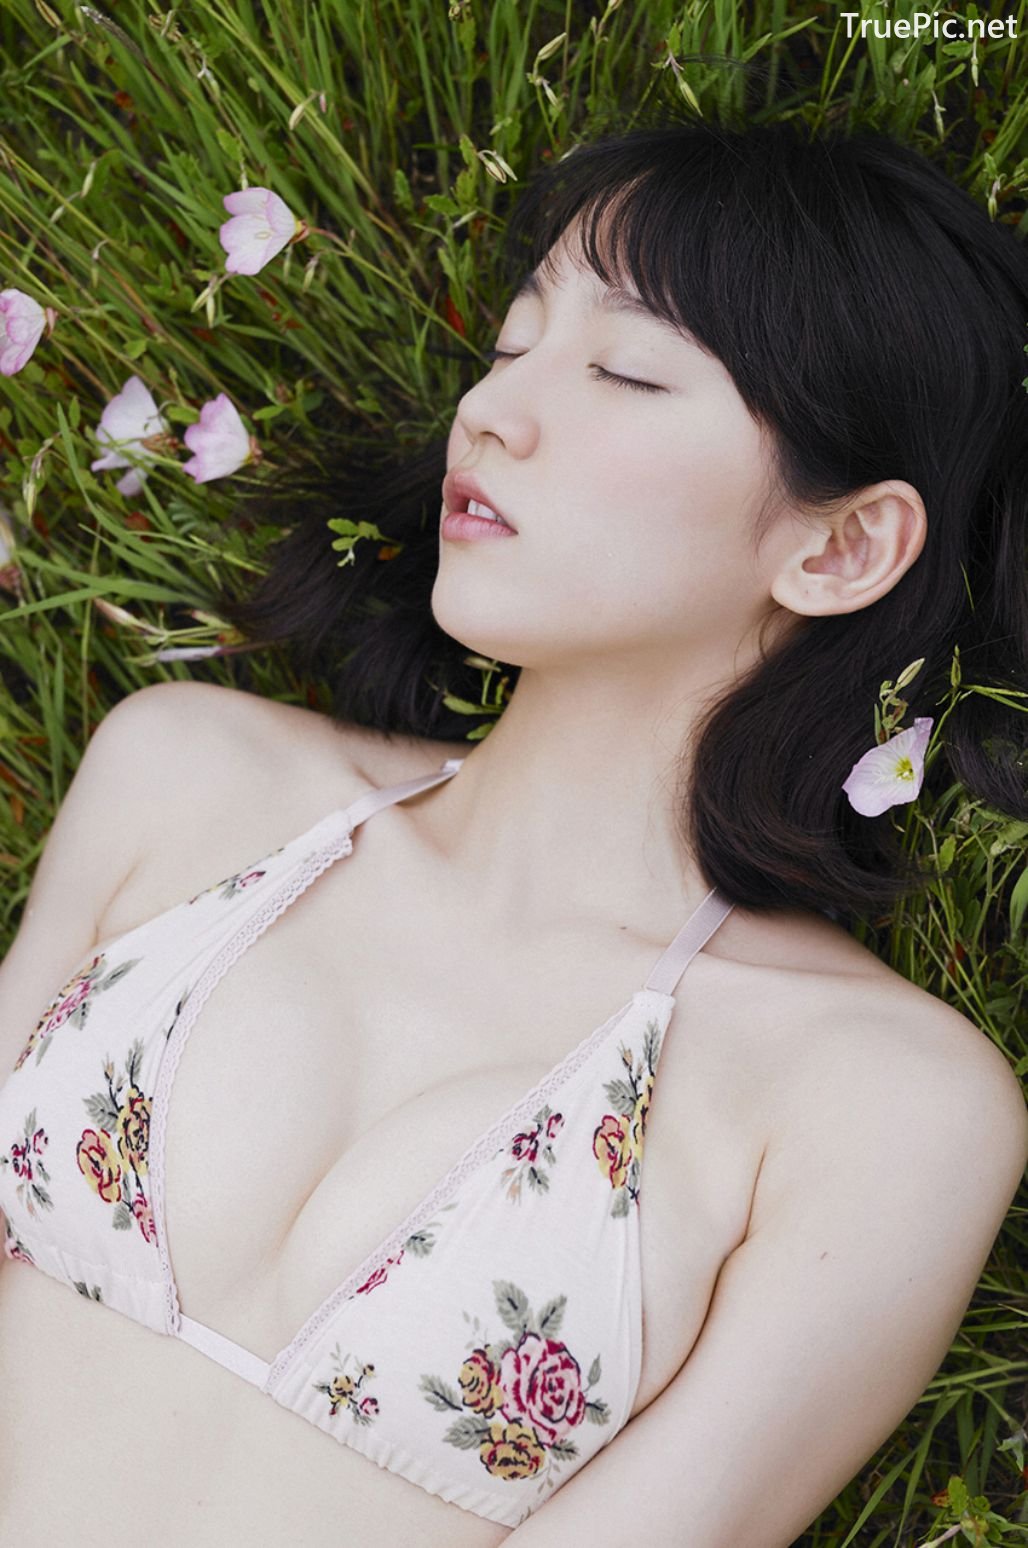 Image-Japanese-Actress-And-Model-Riho-Yoshioka-Pure-Beauty-Of-Sea-Goddess-TruePic.net- Picture-127